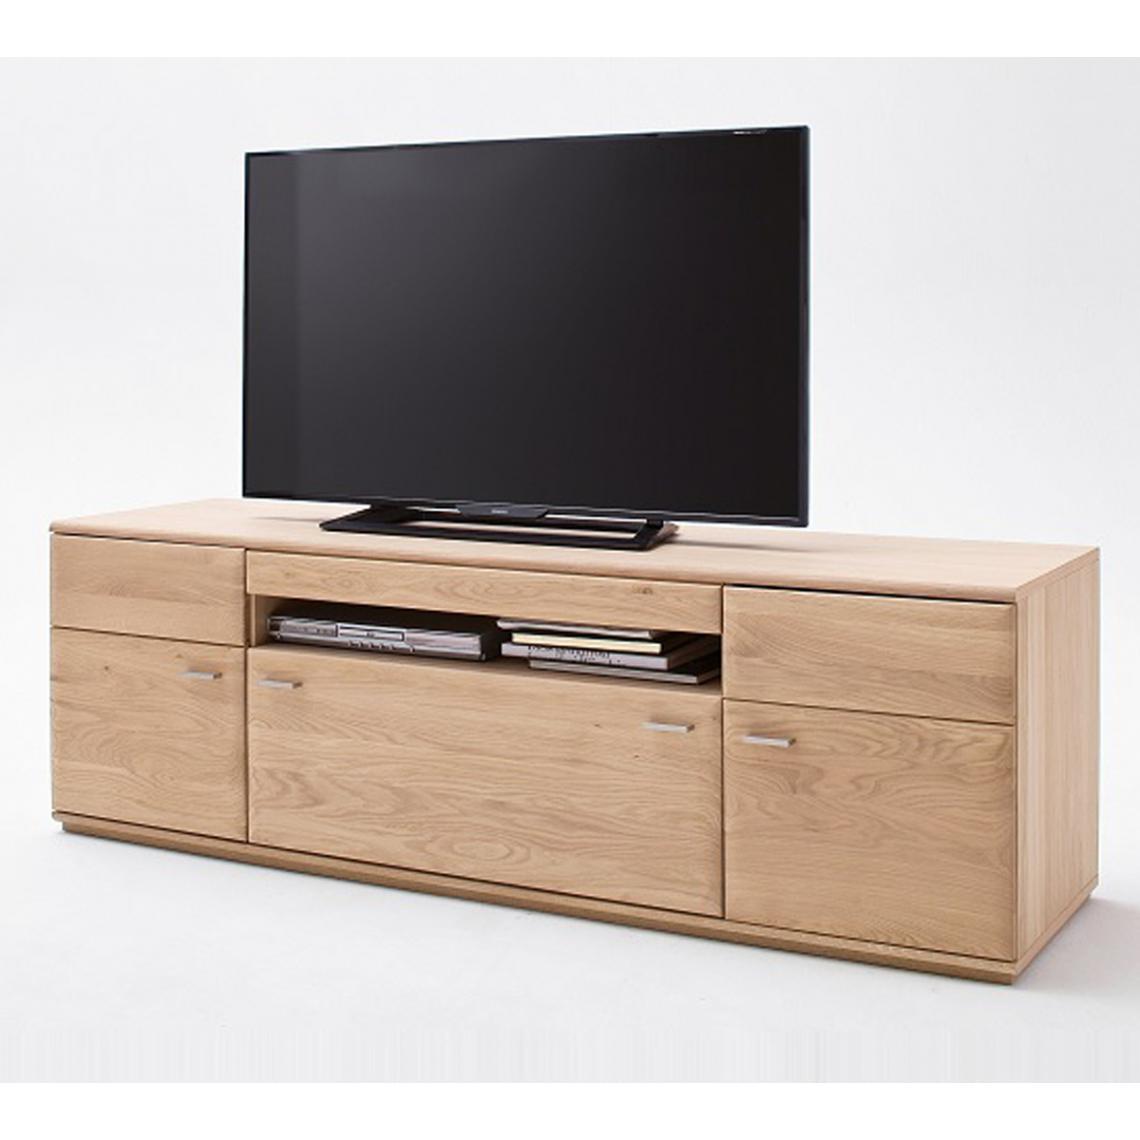 Pegane - Meuble TV en chêne massif bianco - L.180 x H.58 x P.50 cm - Meubles TV, Hi-Fi